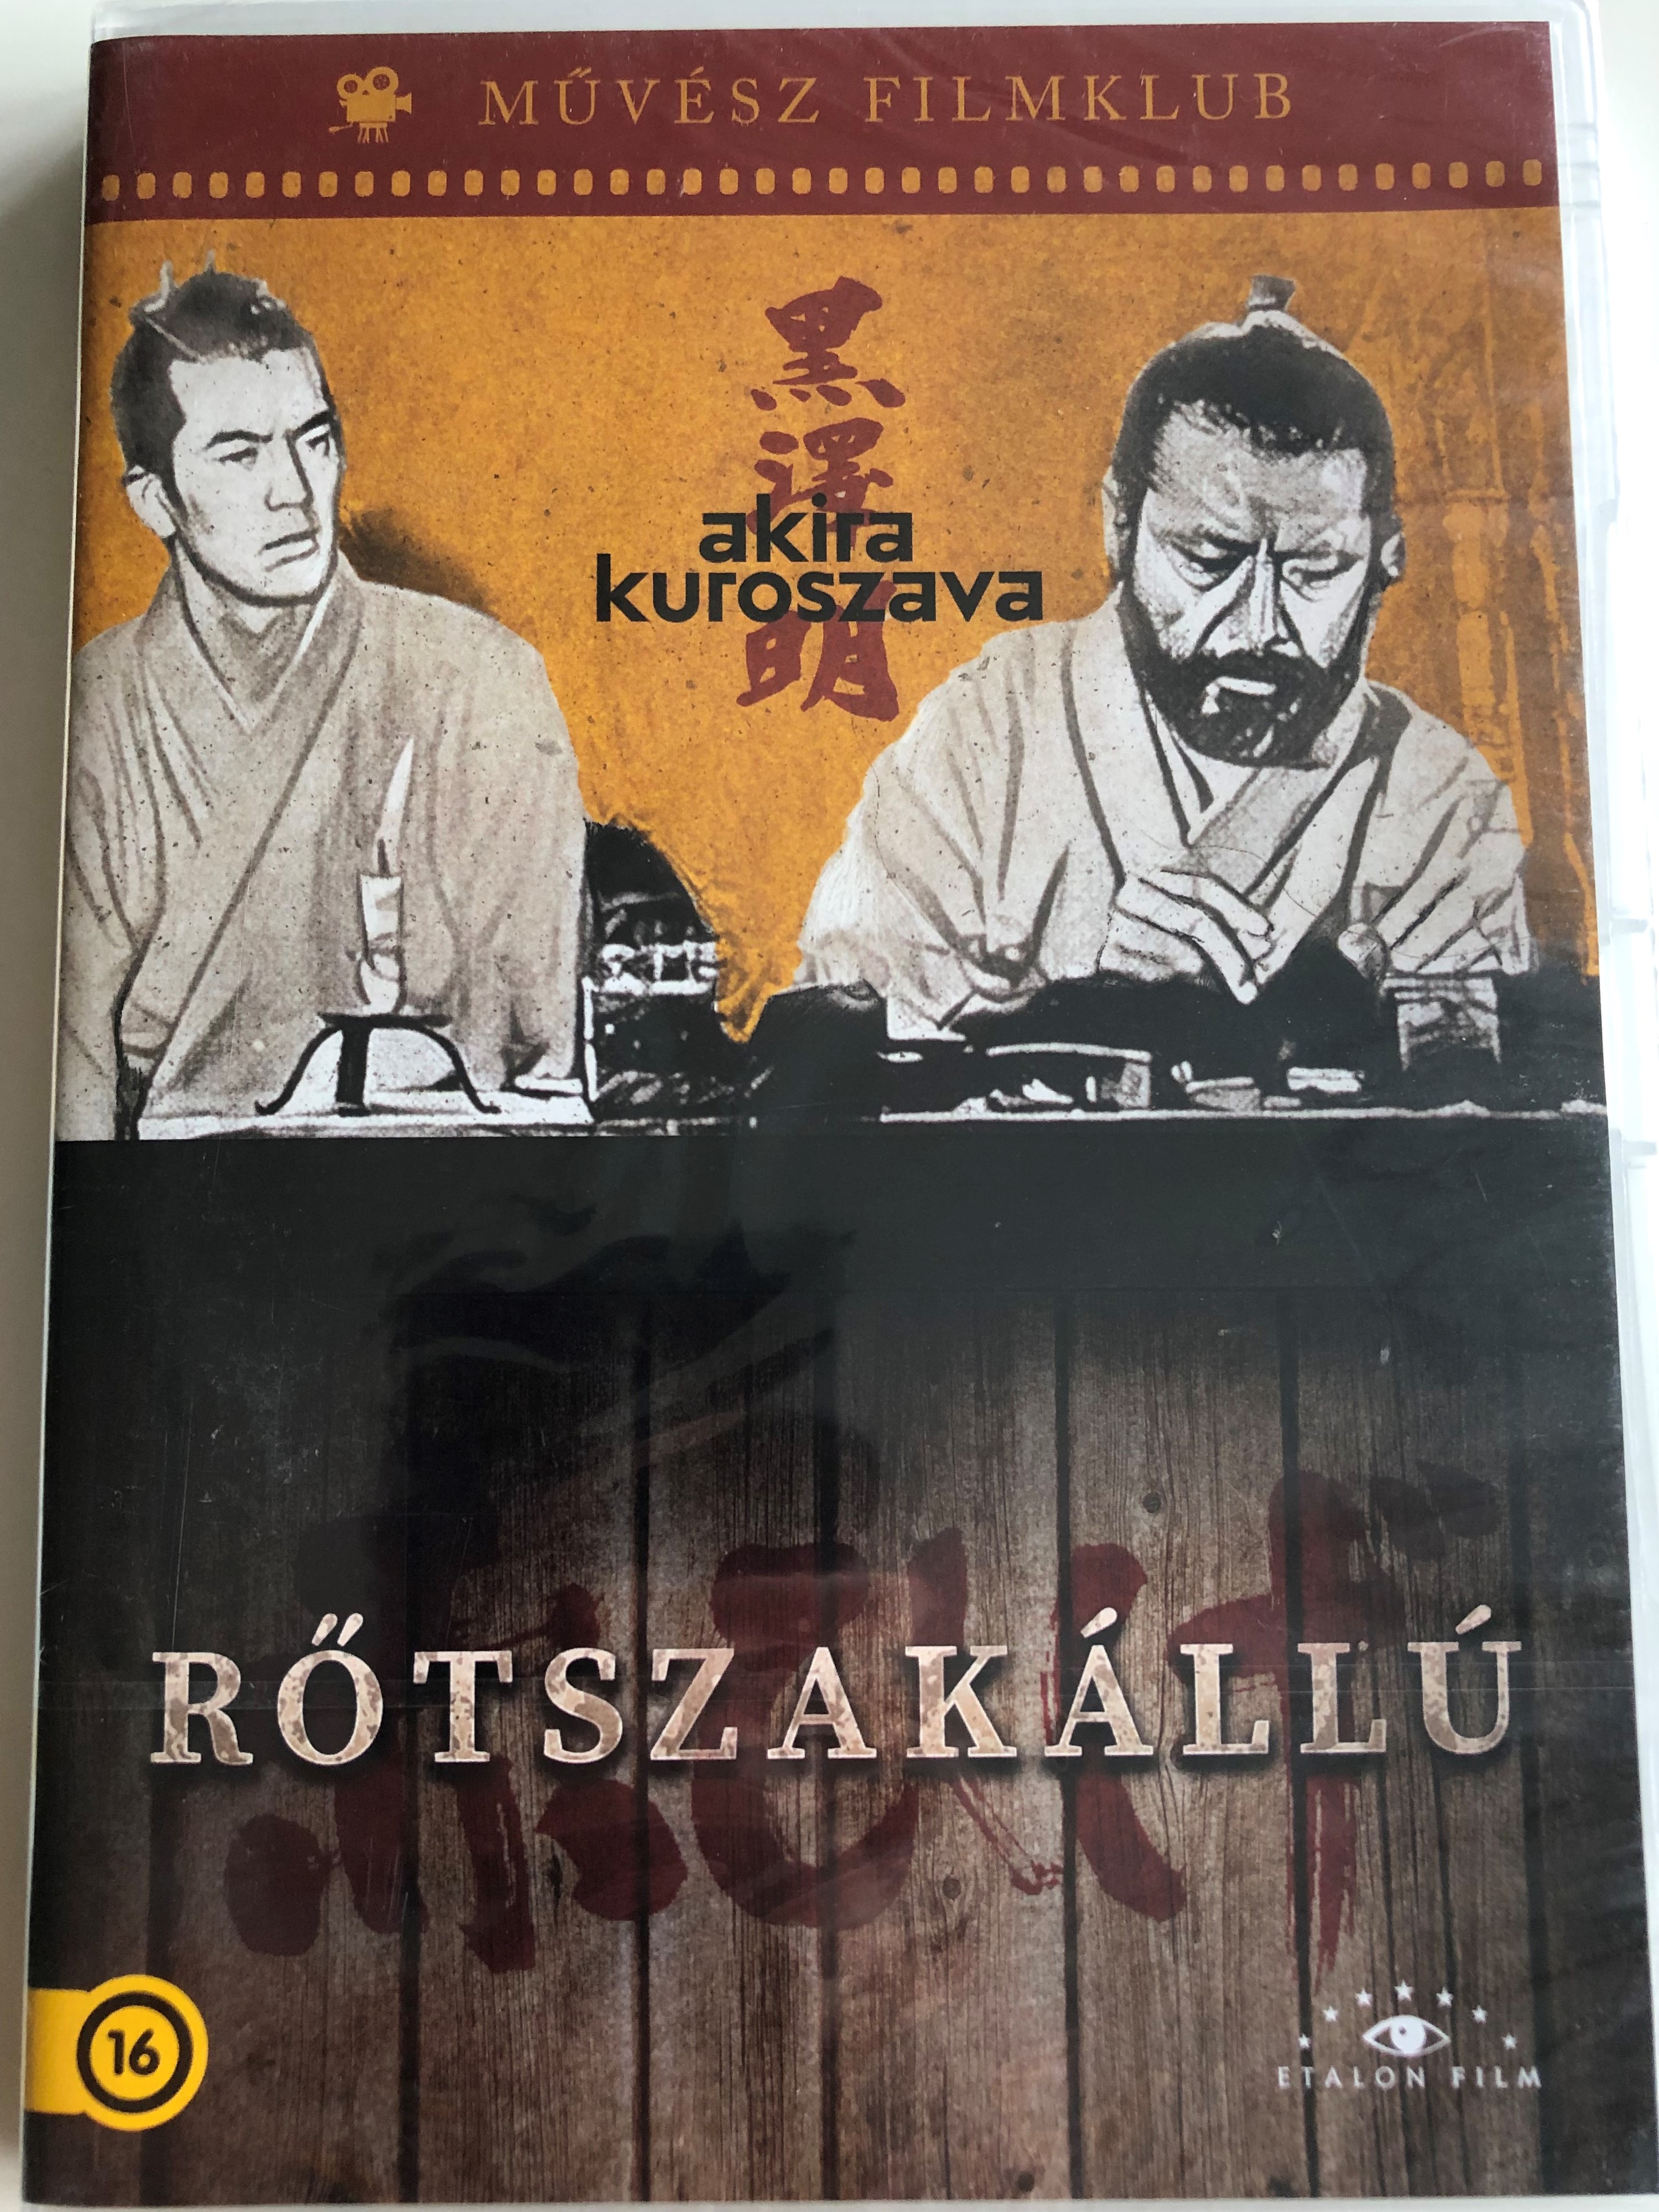 akahige-dvd-1965-r-tszak-ll-red-beard-directed-by-akira-kurosawa-starring-toshiro-mifune-y-z-kayama-m-v-sz-filmklub-1-.jpg